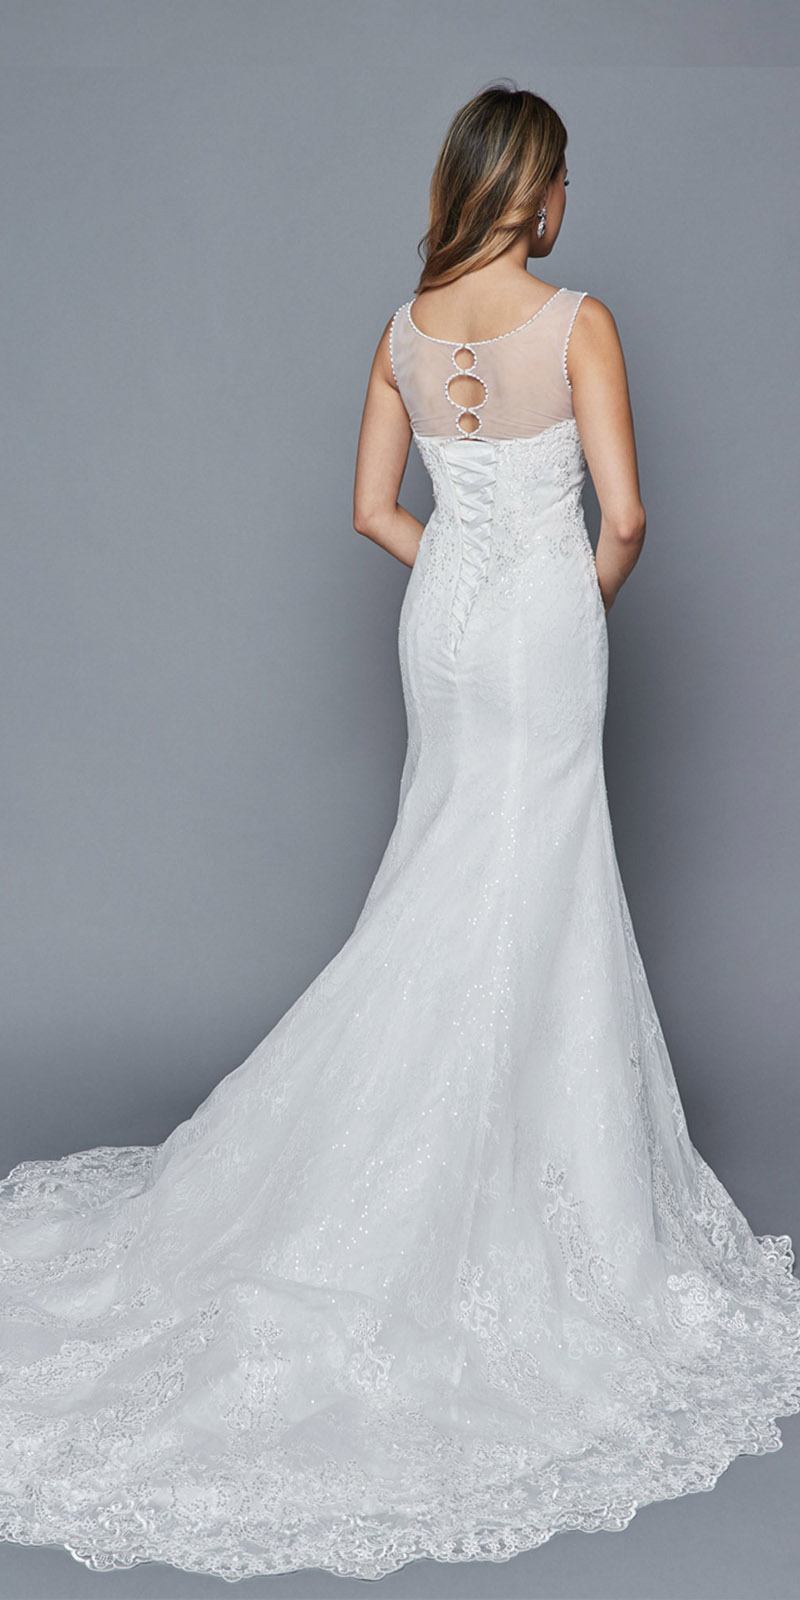 Illusion Sweetheart Bodice White Mermaid Style Wedding Gown 